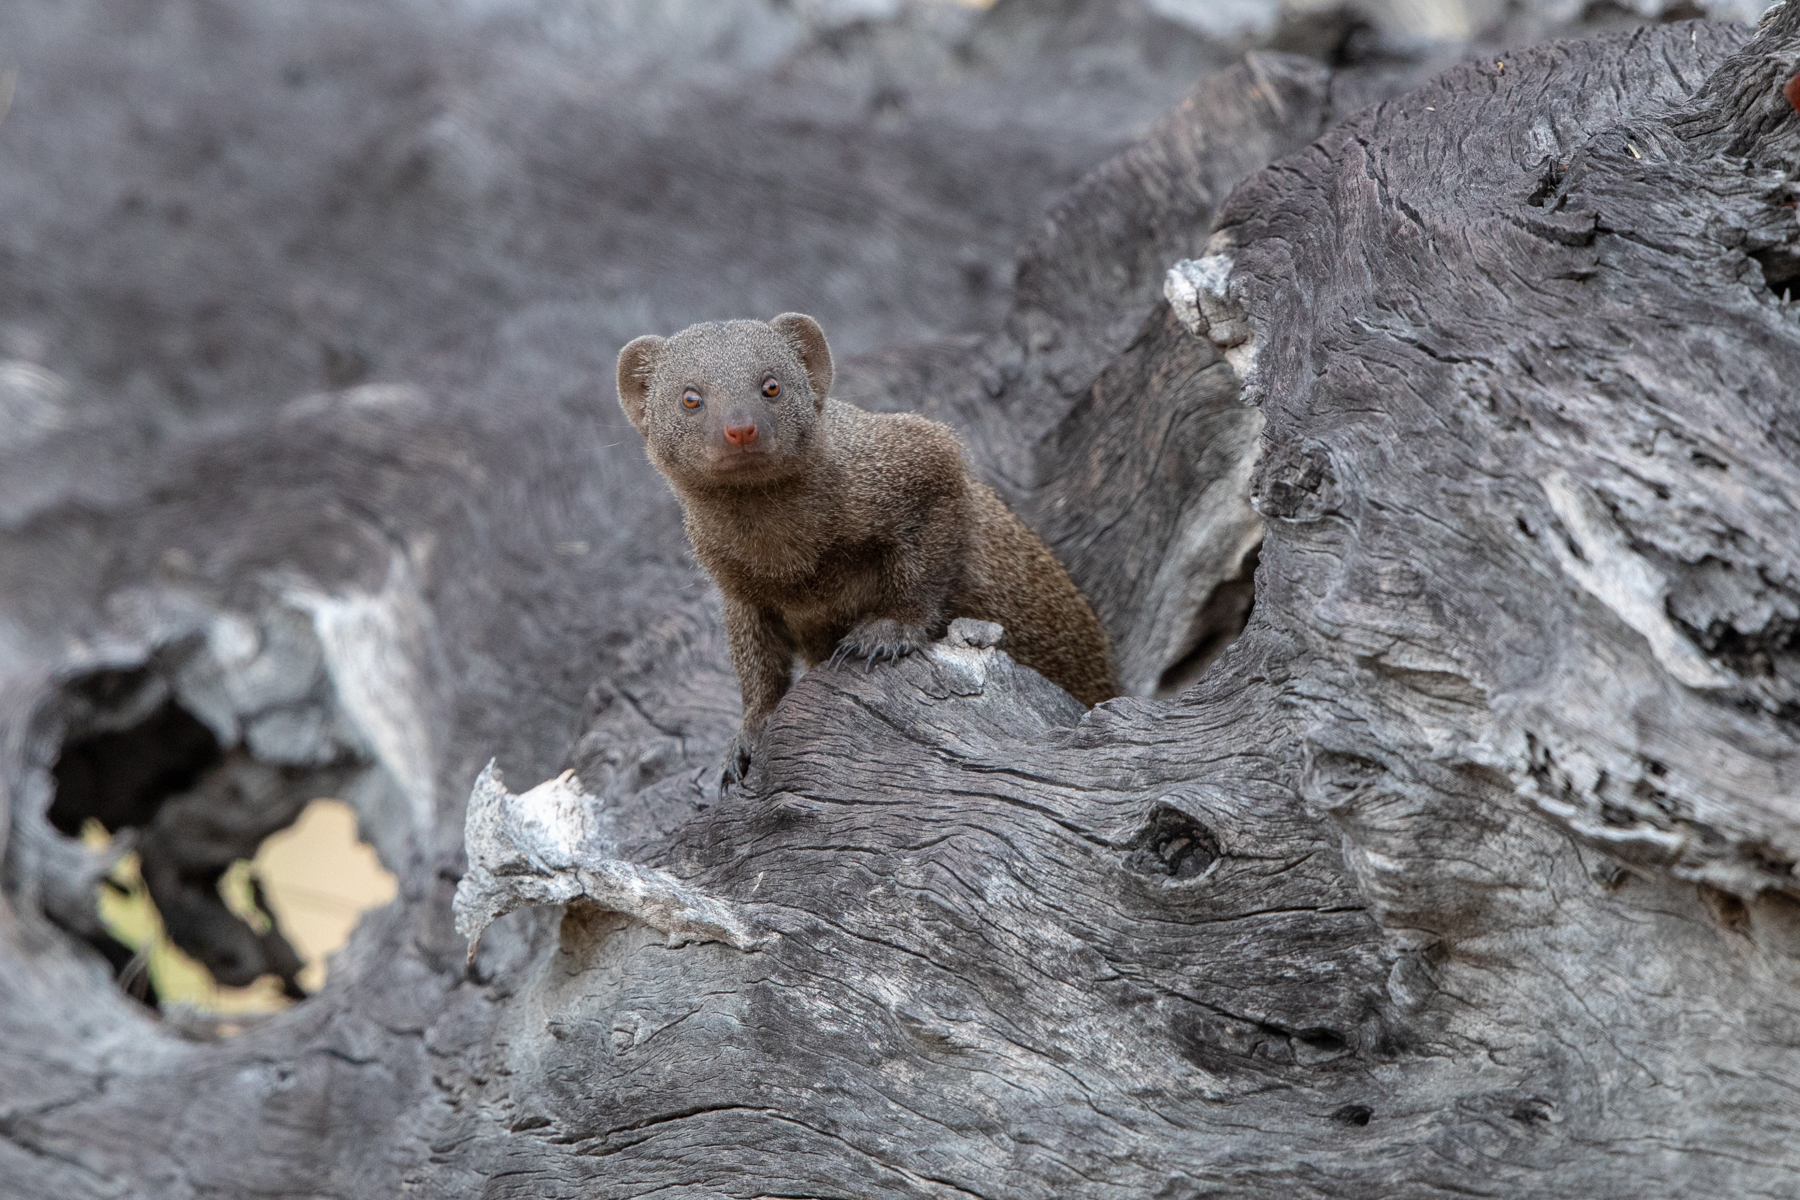 An inquisitive Dwarf Mongoose